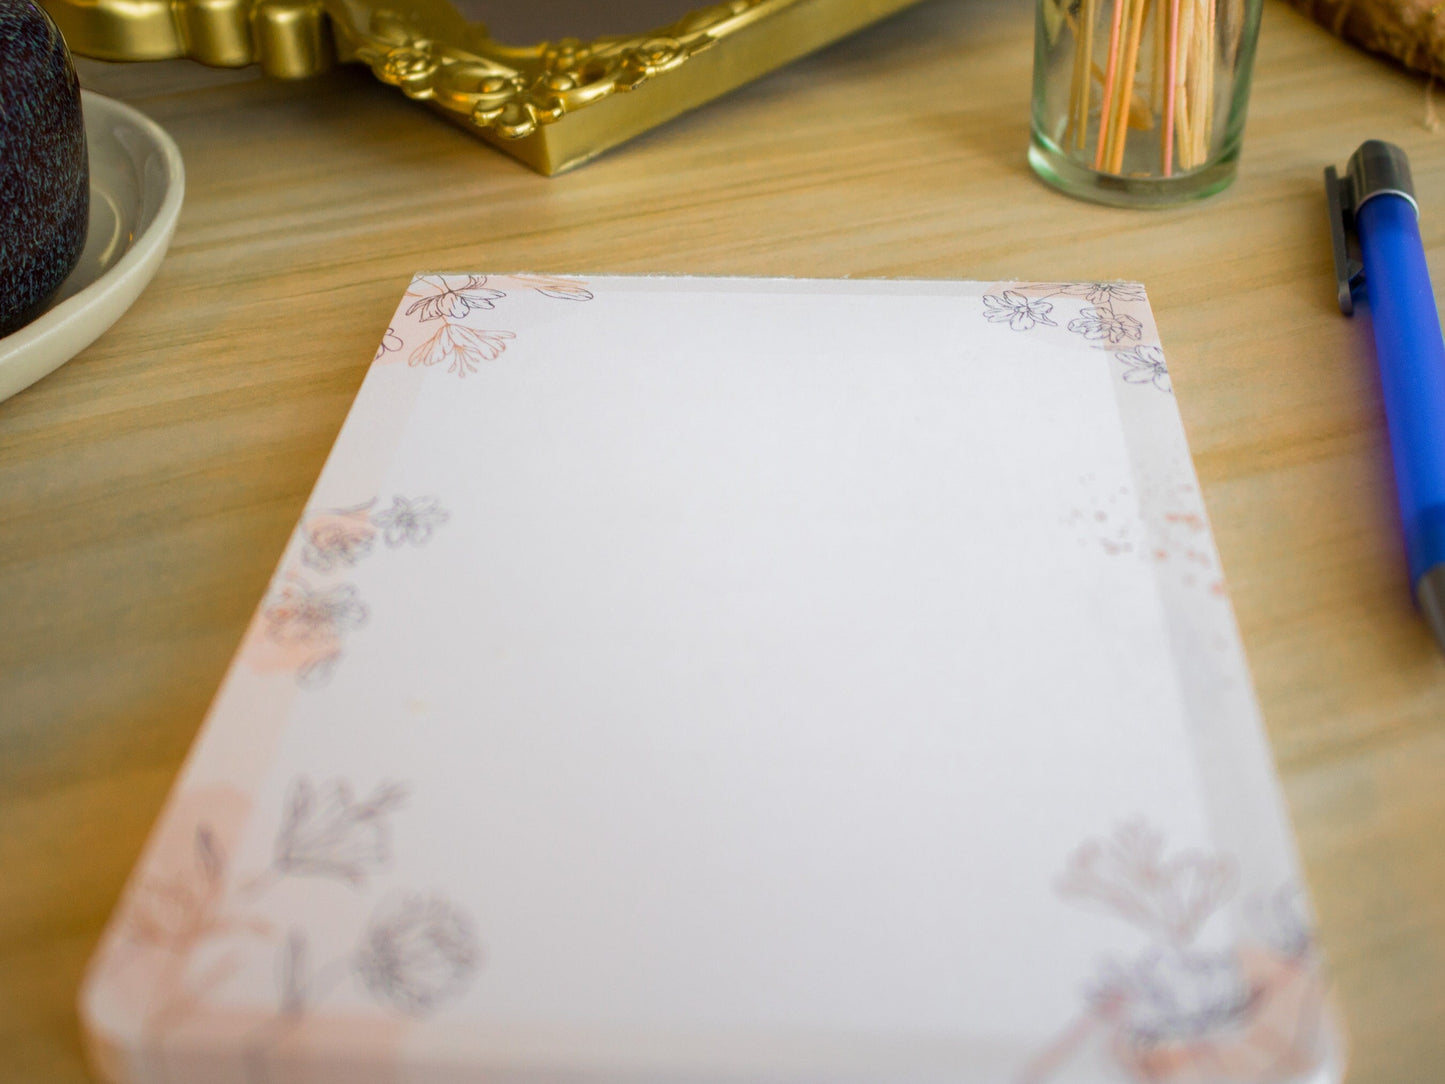 Delicate Flower Memo Notepad | Memopad | 50 Sheets